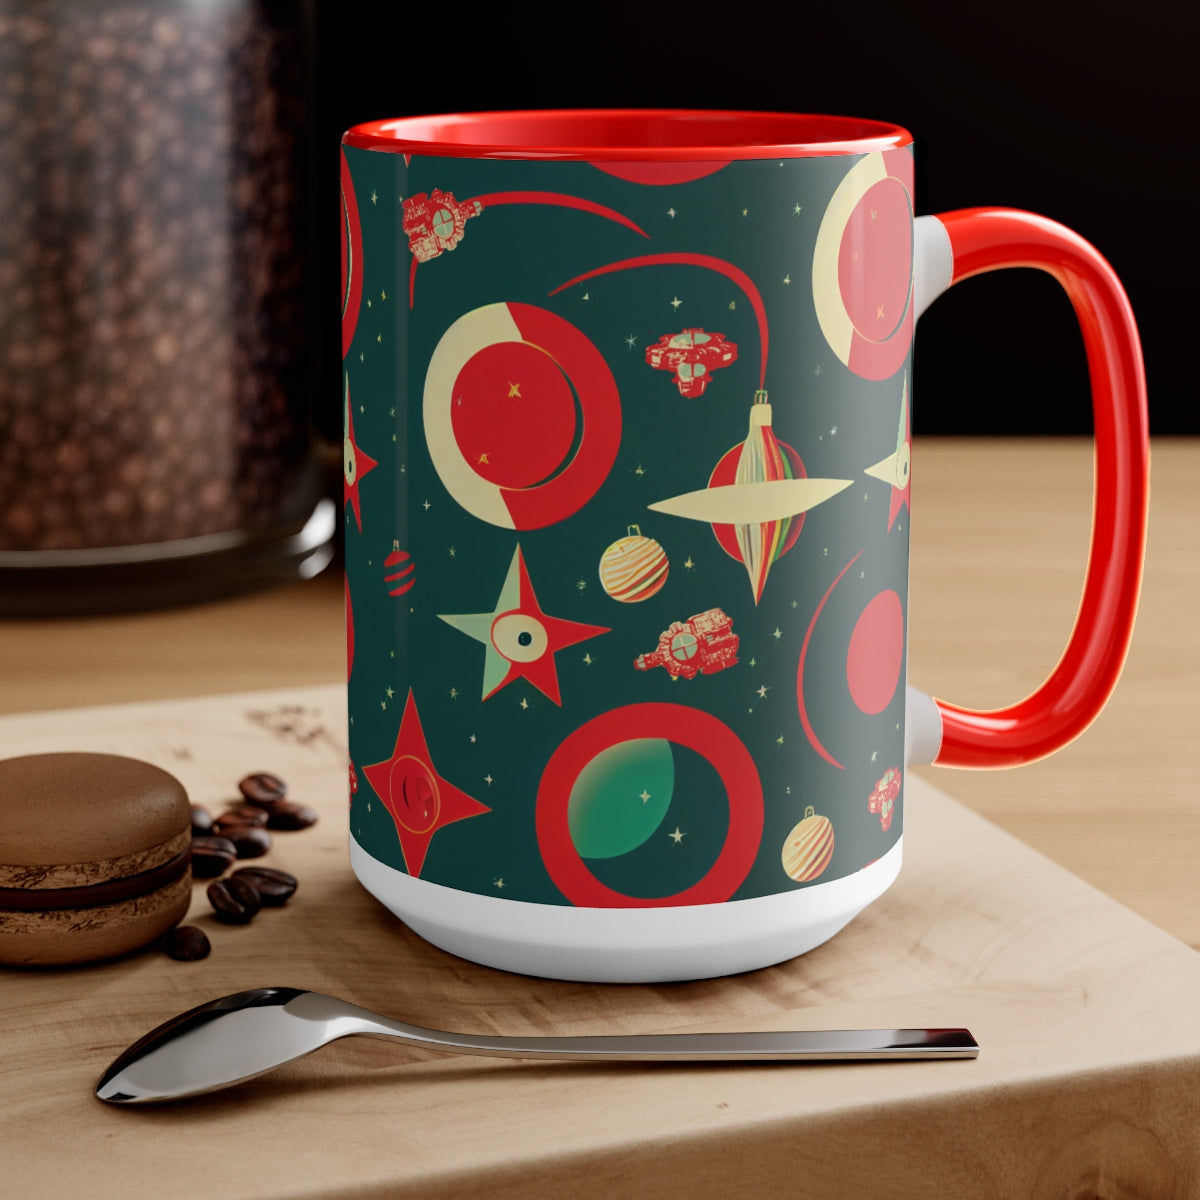 Teal coffee mug aesthetic, turquoise, morning coffee aesthetic, eucalyptus, morning inspo, inspirational